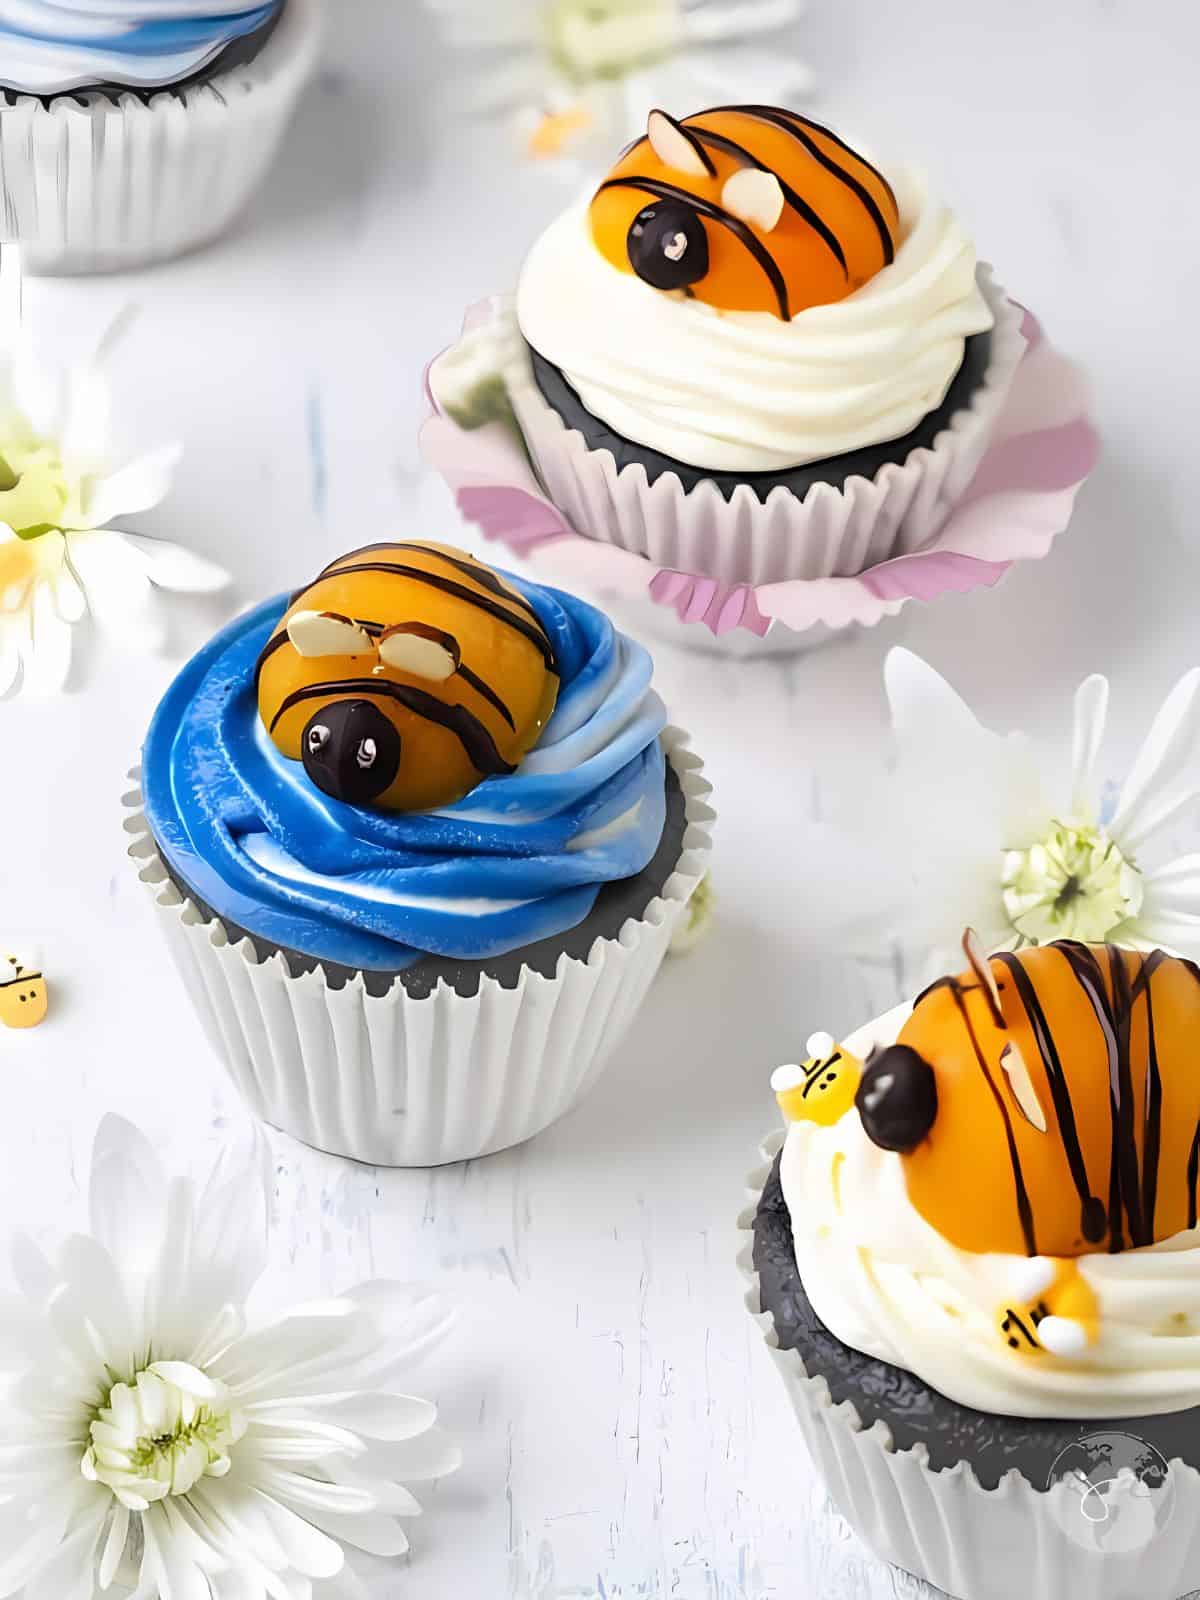 Bumblebee themed chocolate cupcakes.